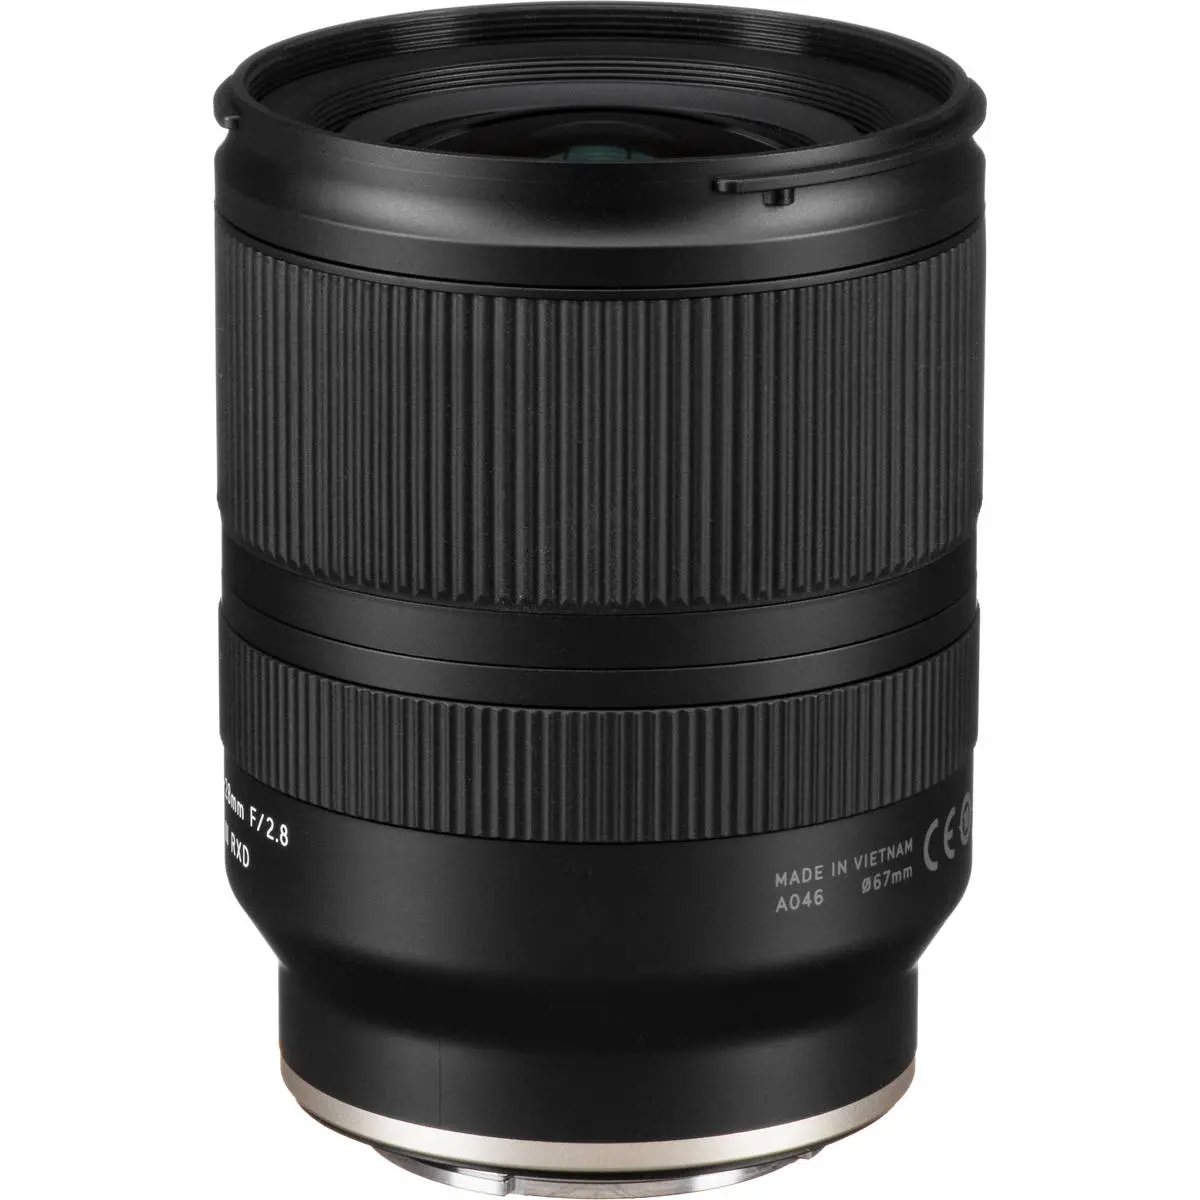 1. Tamron 17-28mm f/2.8 Di III RXD (A046) Sony E Lens